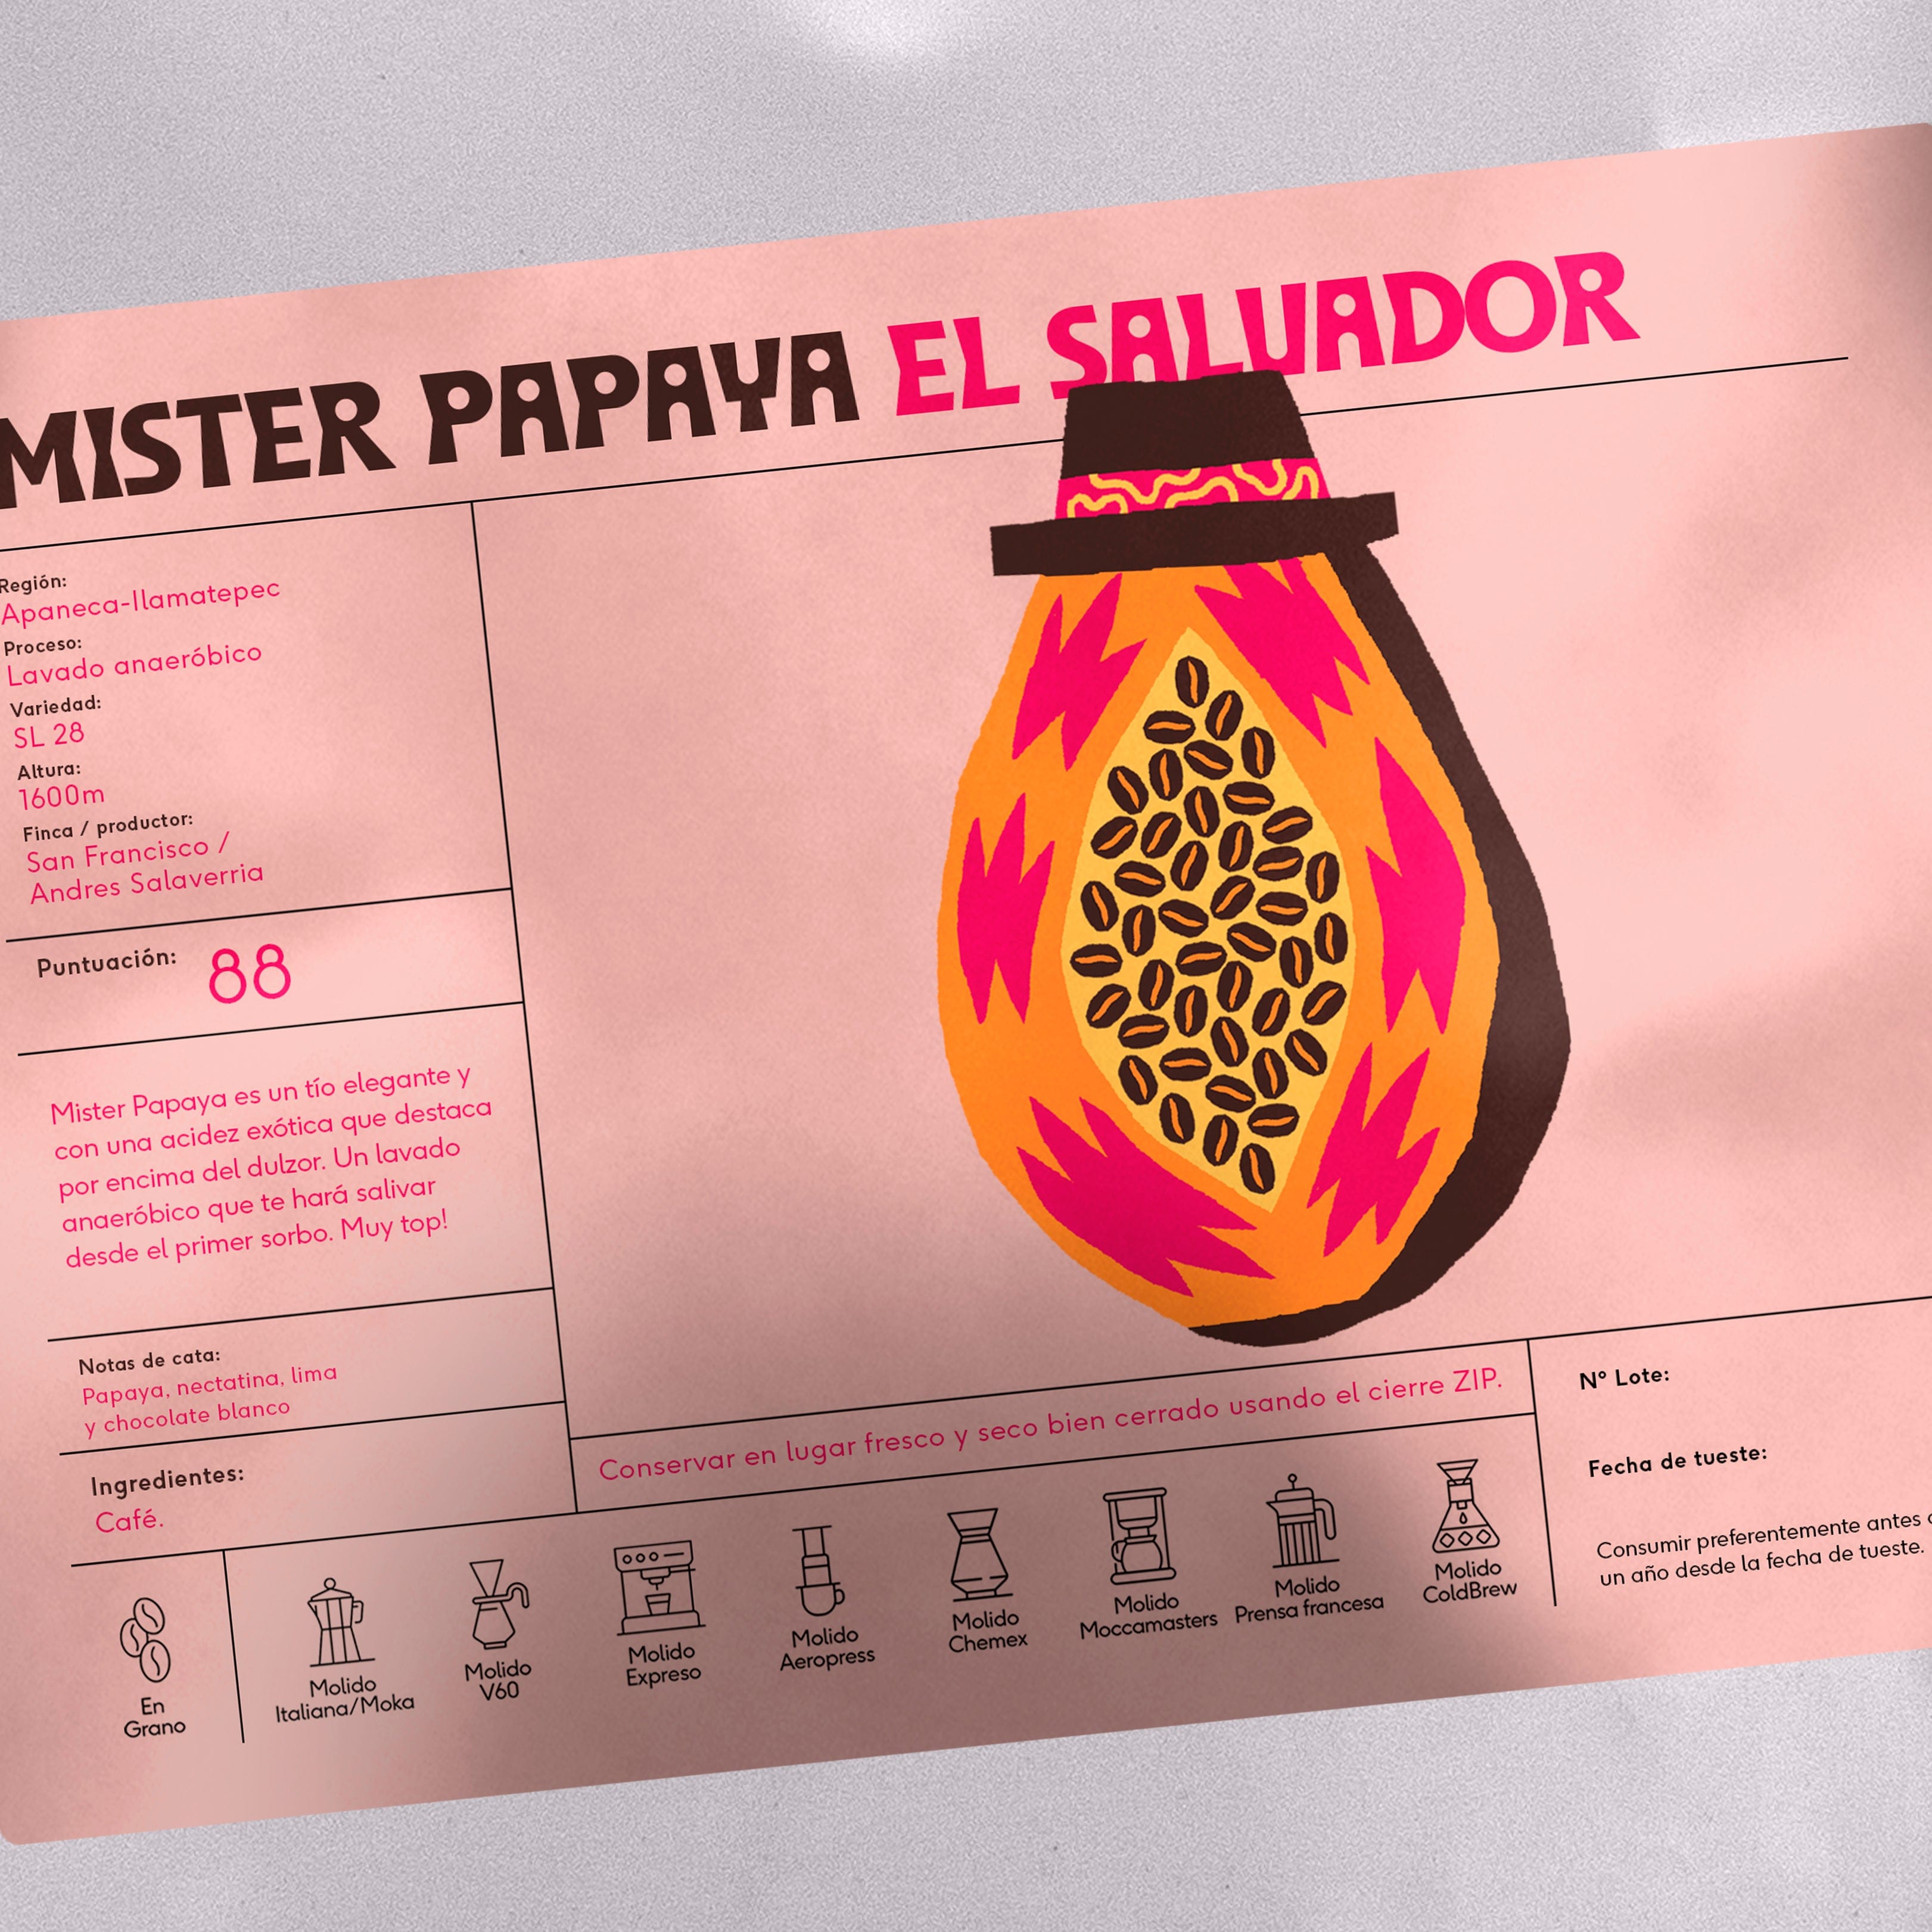 Mister Papaya de El Salvador